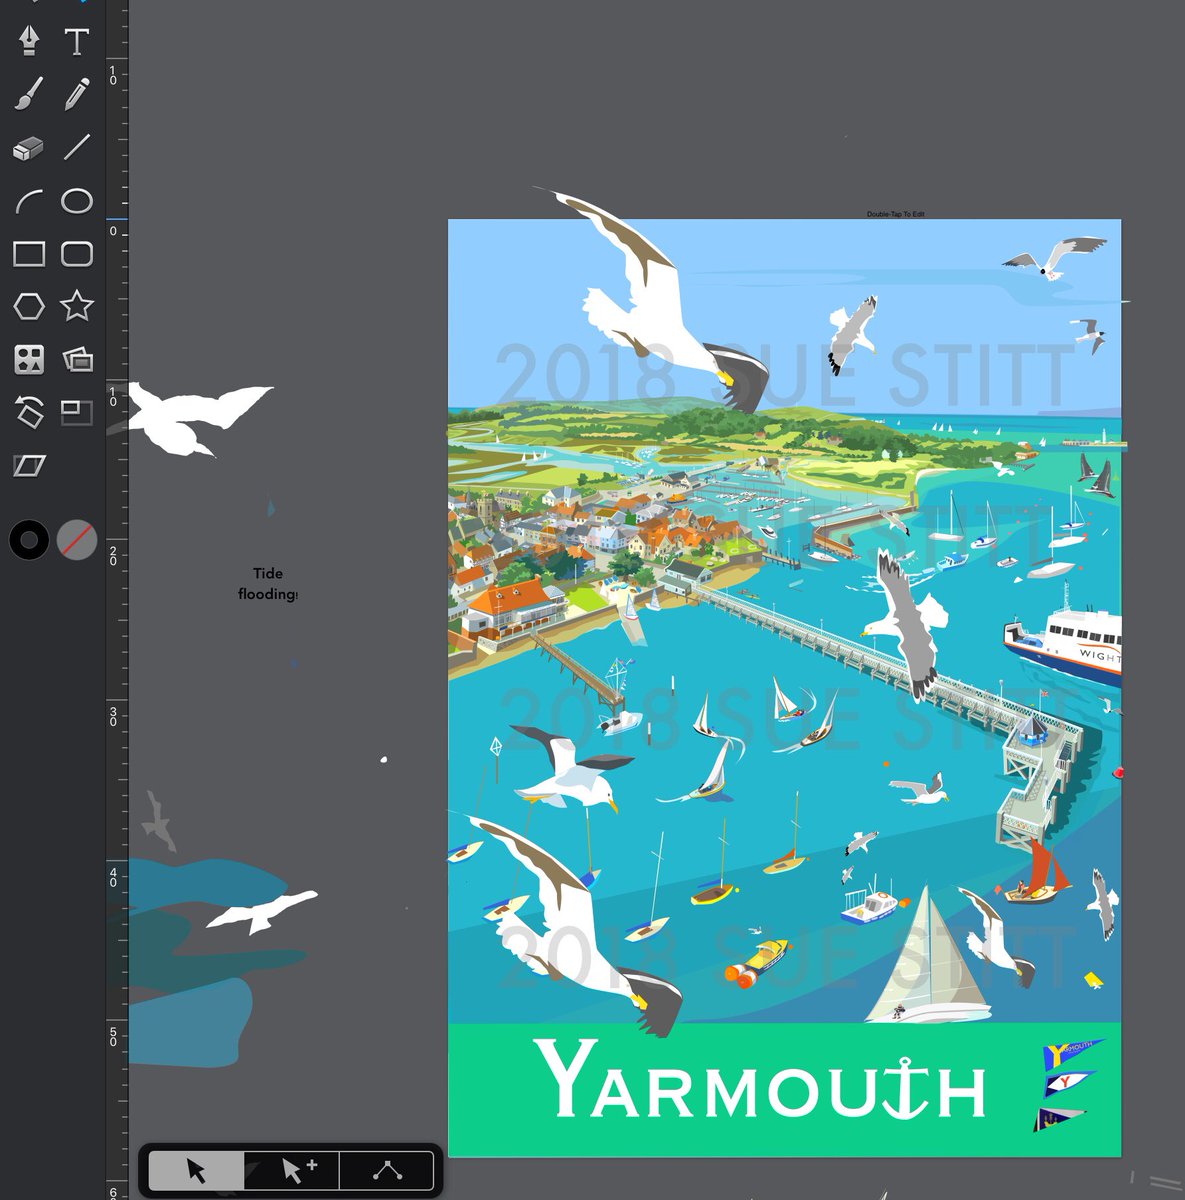 Trying to finish this before Yarmouth Harbours Spring Festival on Saturday.... #suesstitt.com #seagulls #springfestival #isleofwight #sailing #retroposters #saturday5may2018 #ipadart #digitalprints #coastalprints #yarmouthisleofwight #wightsailors #wightlink